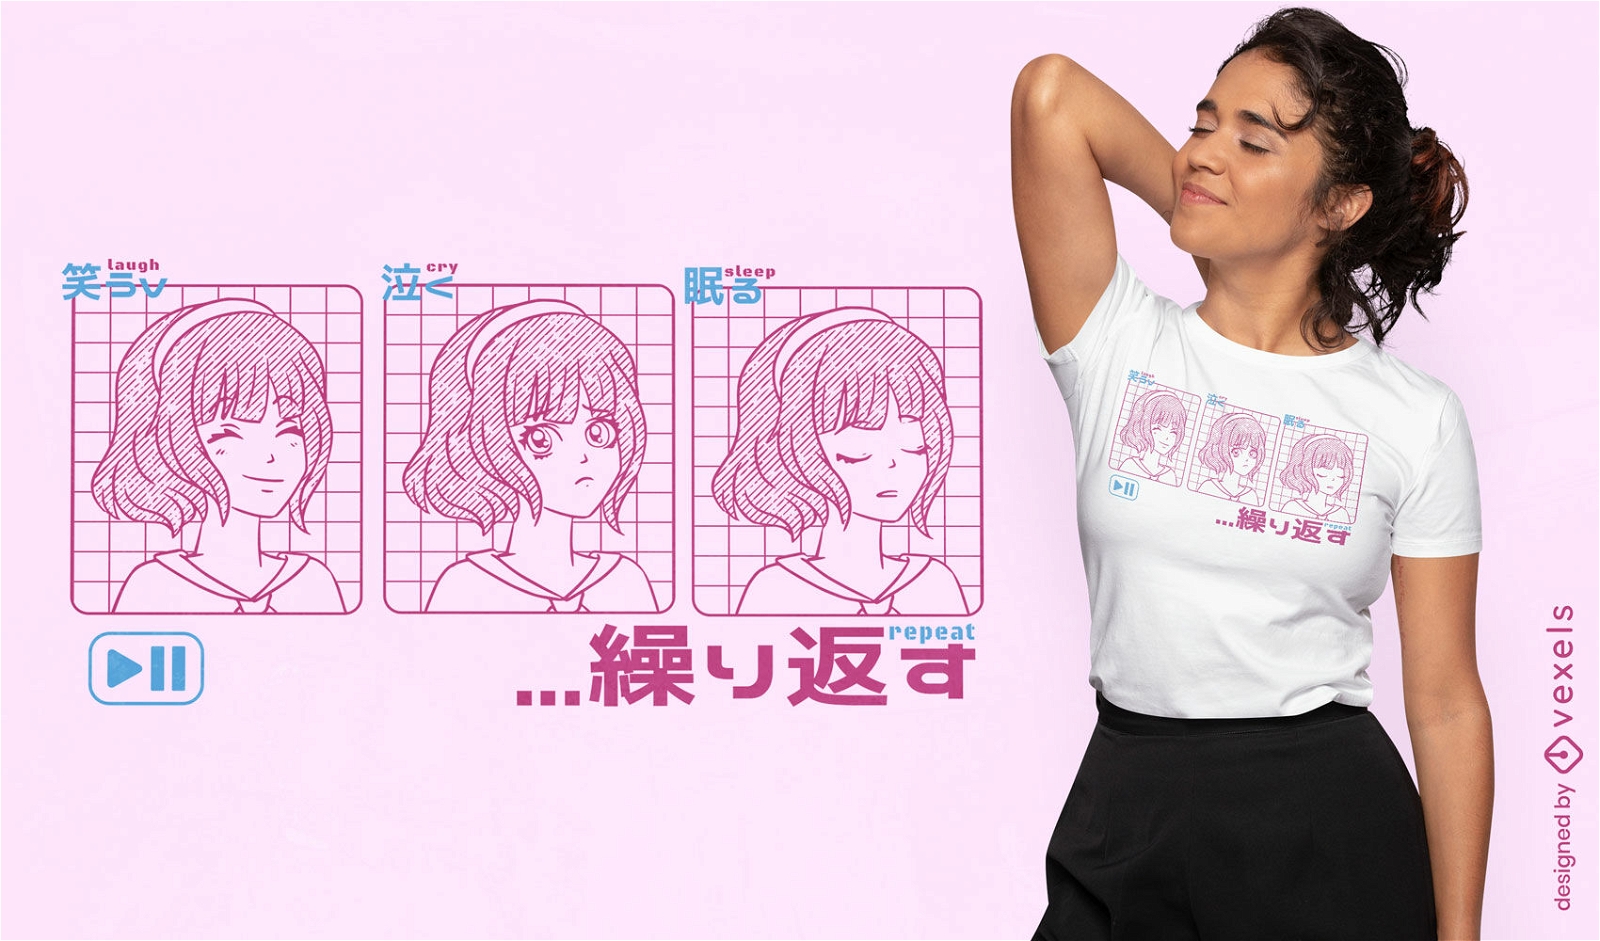 Laugh cry sleep anime girl t-shirt design